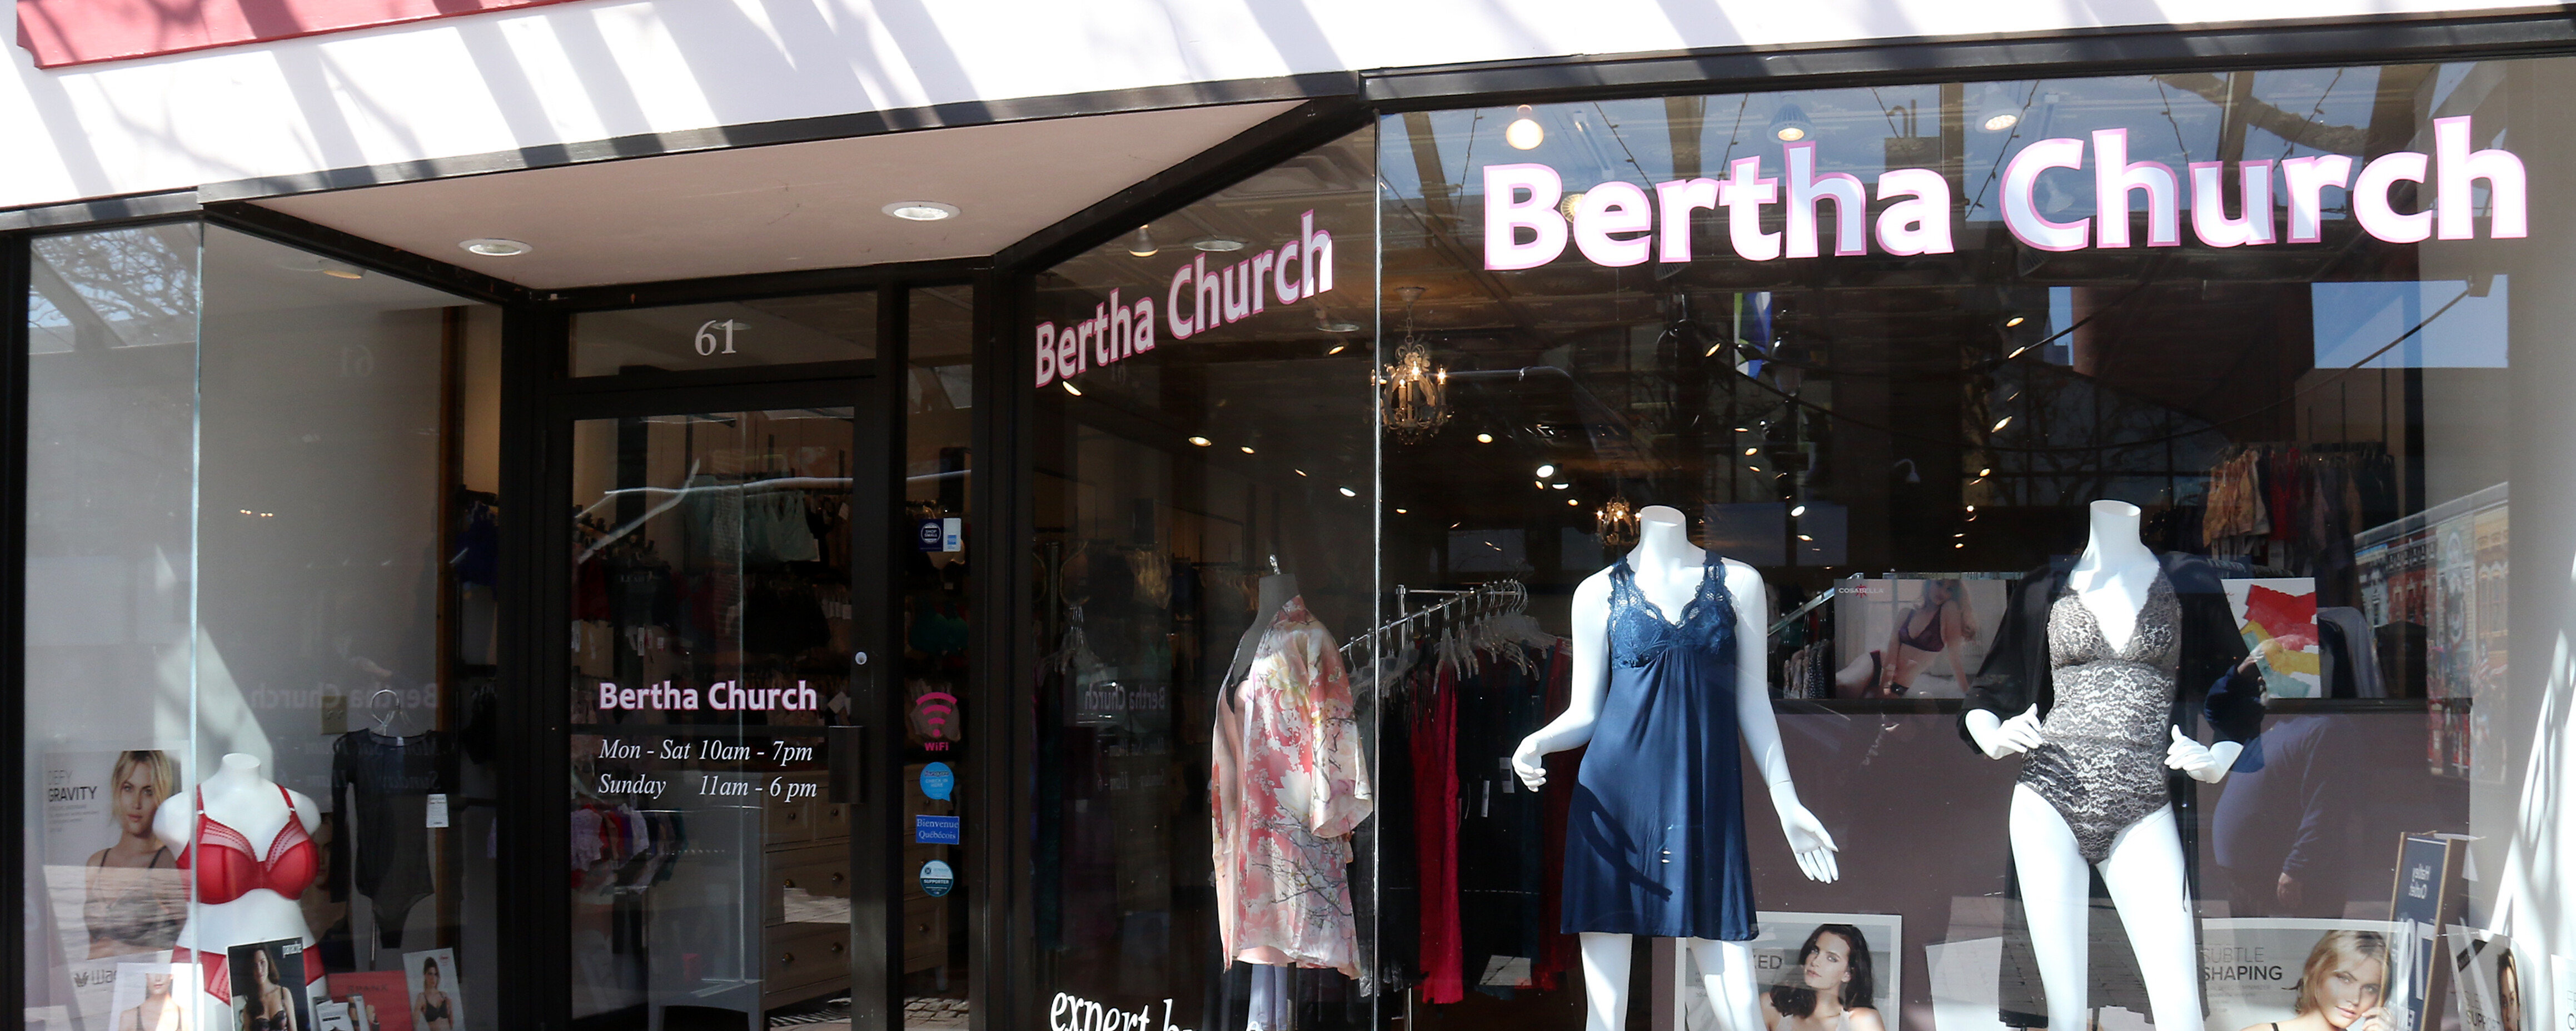 Bertha Church Intimate Apparel